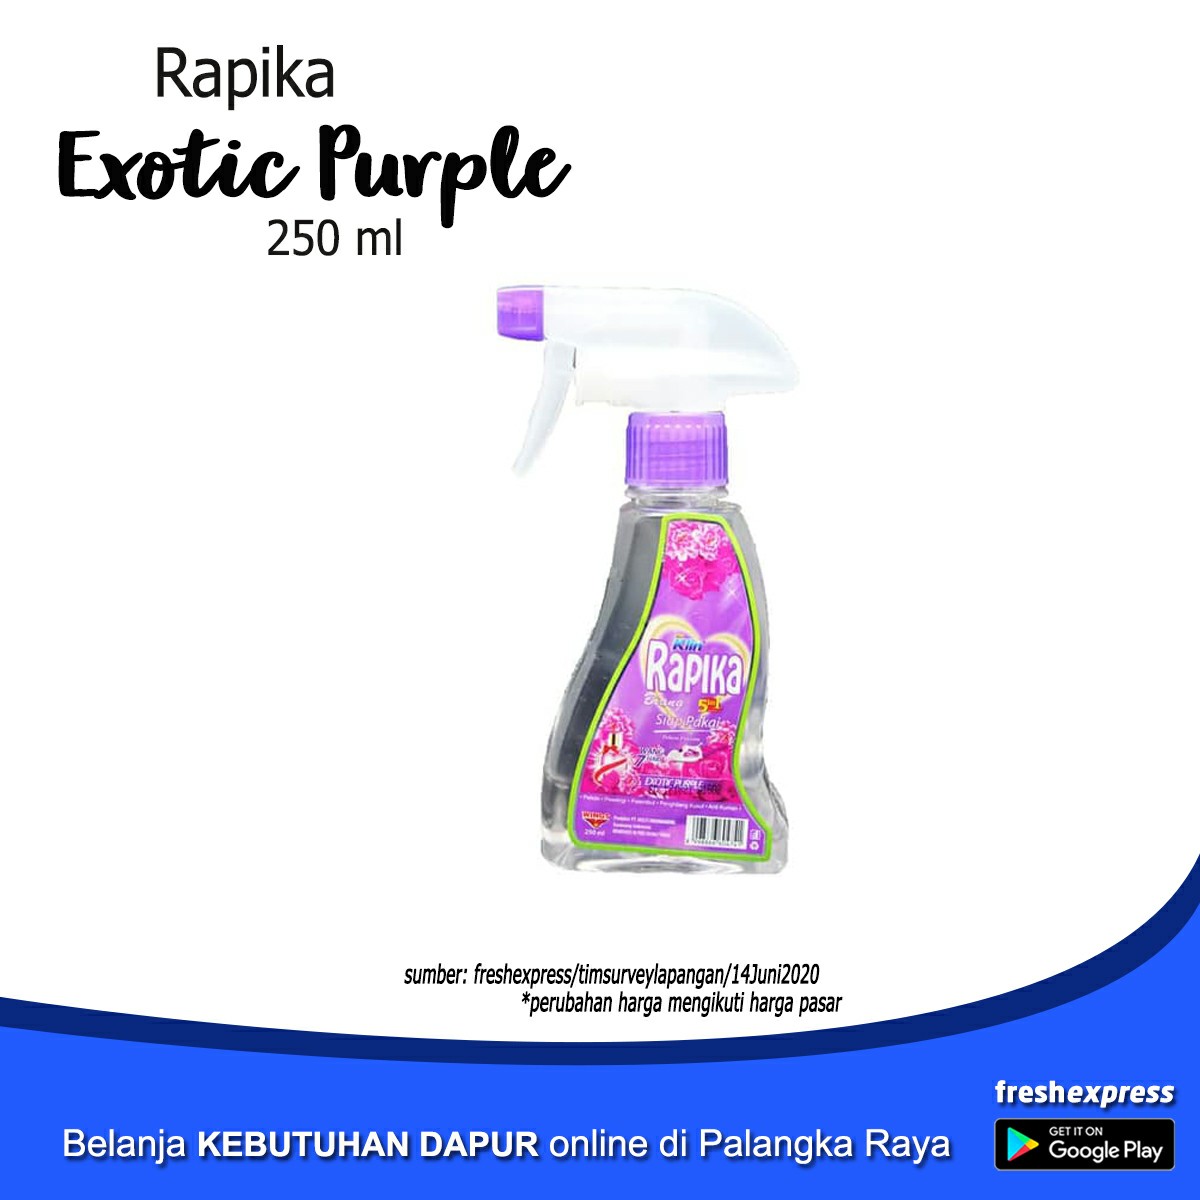 Rapika Exptic Purple 250 Ml